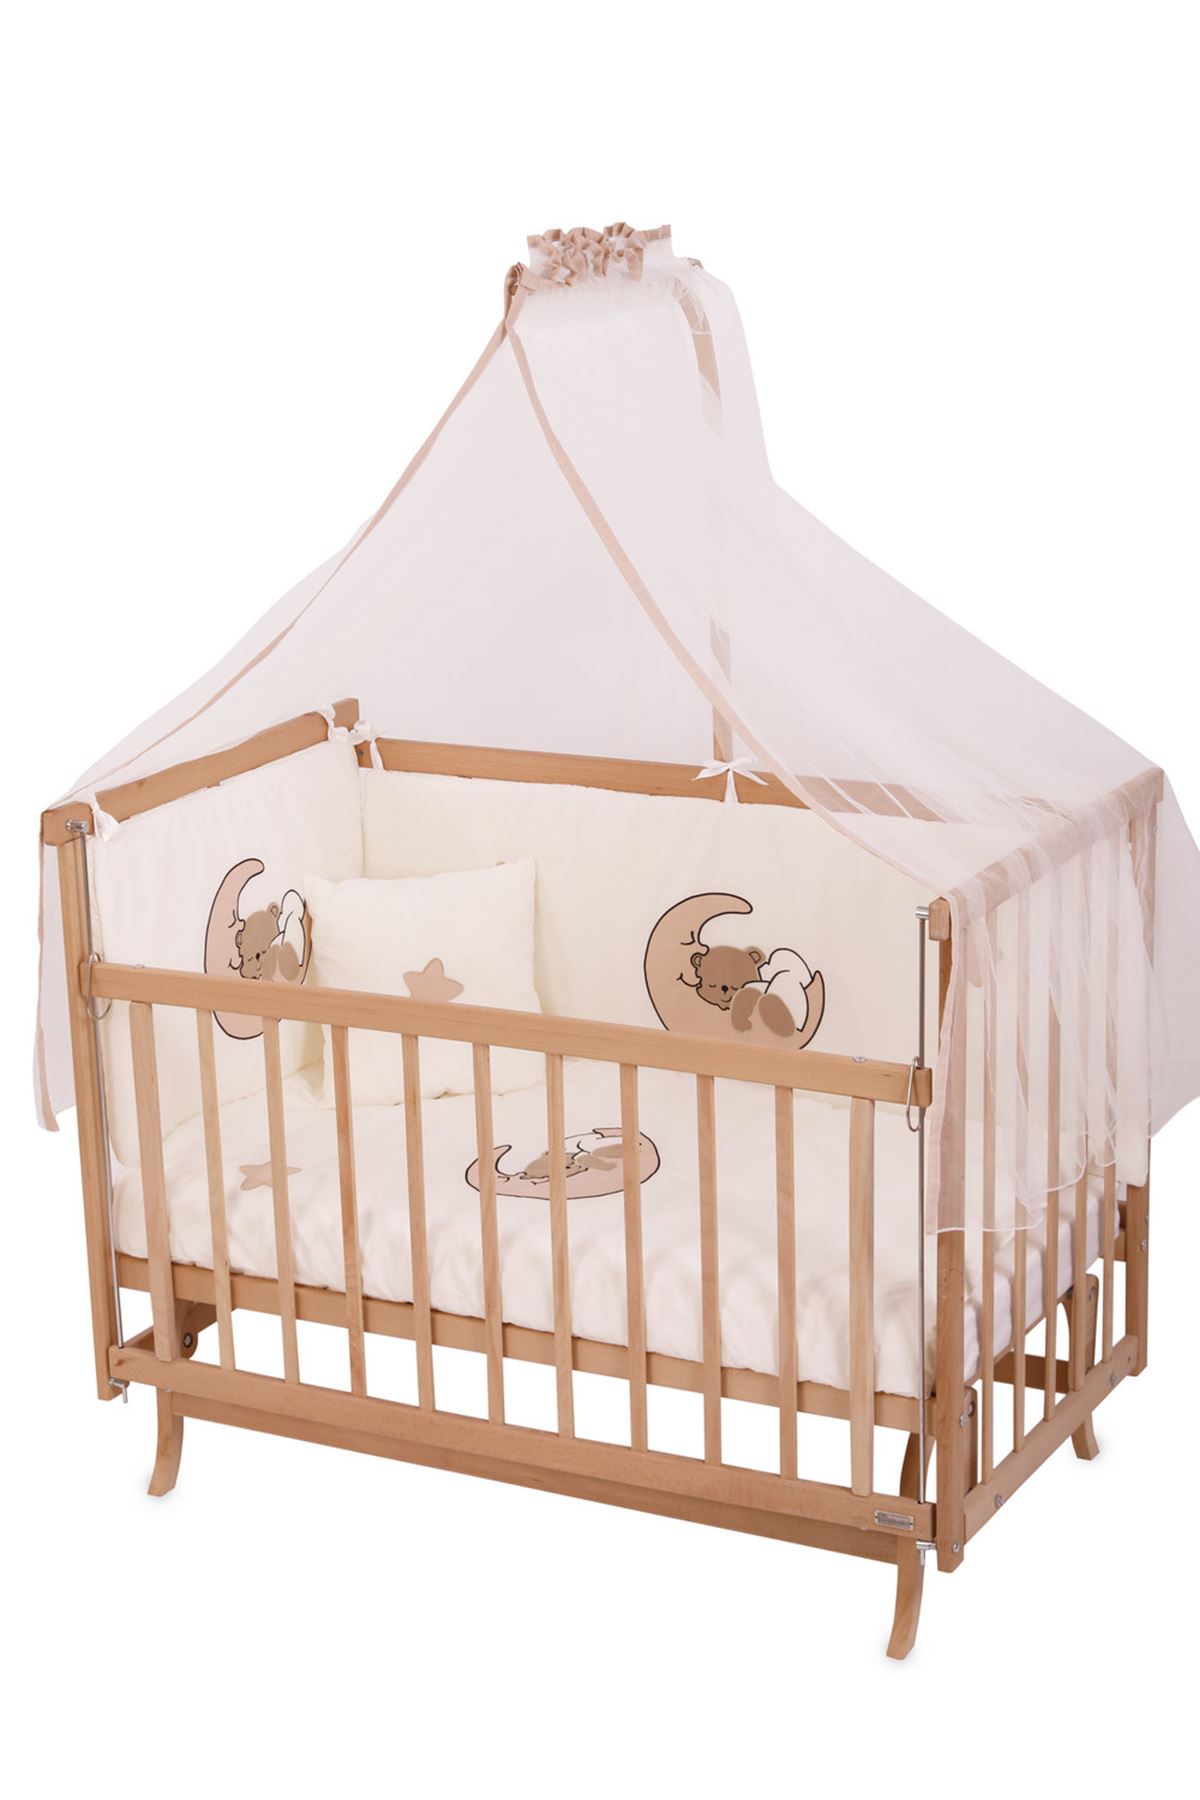 Baby Crib with "Cream Bear" Sleeping Set